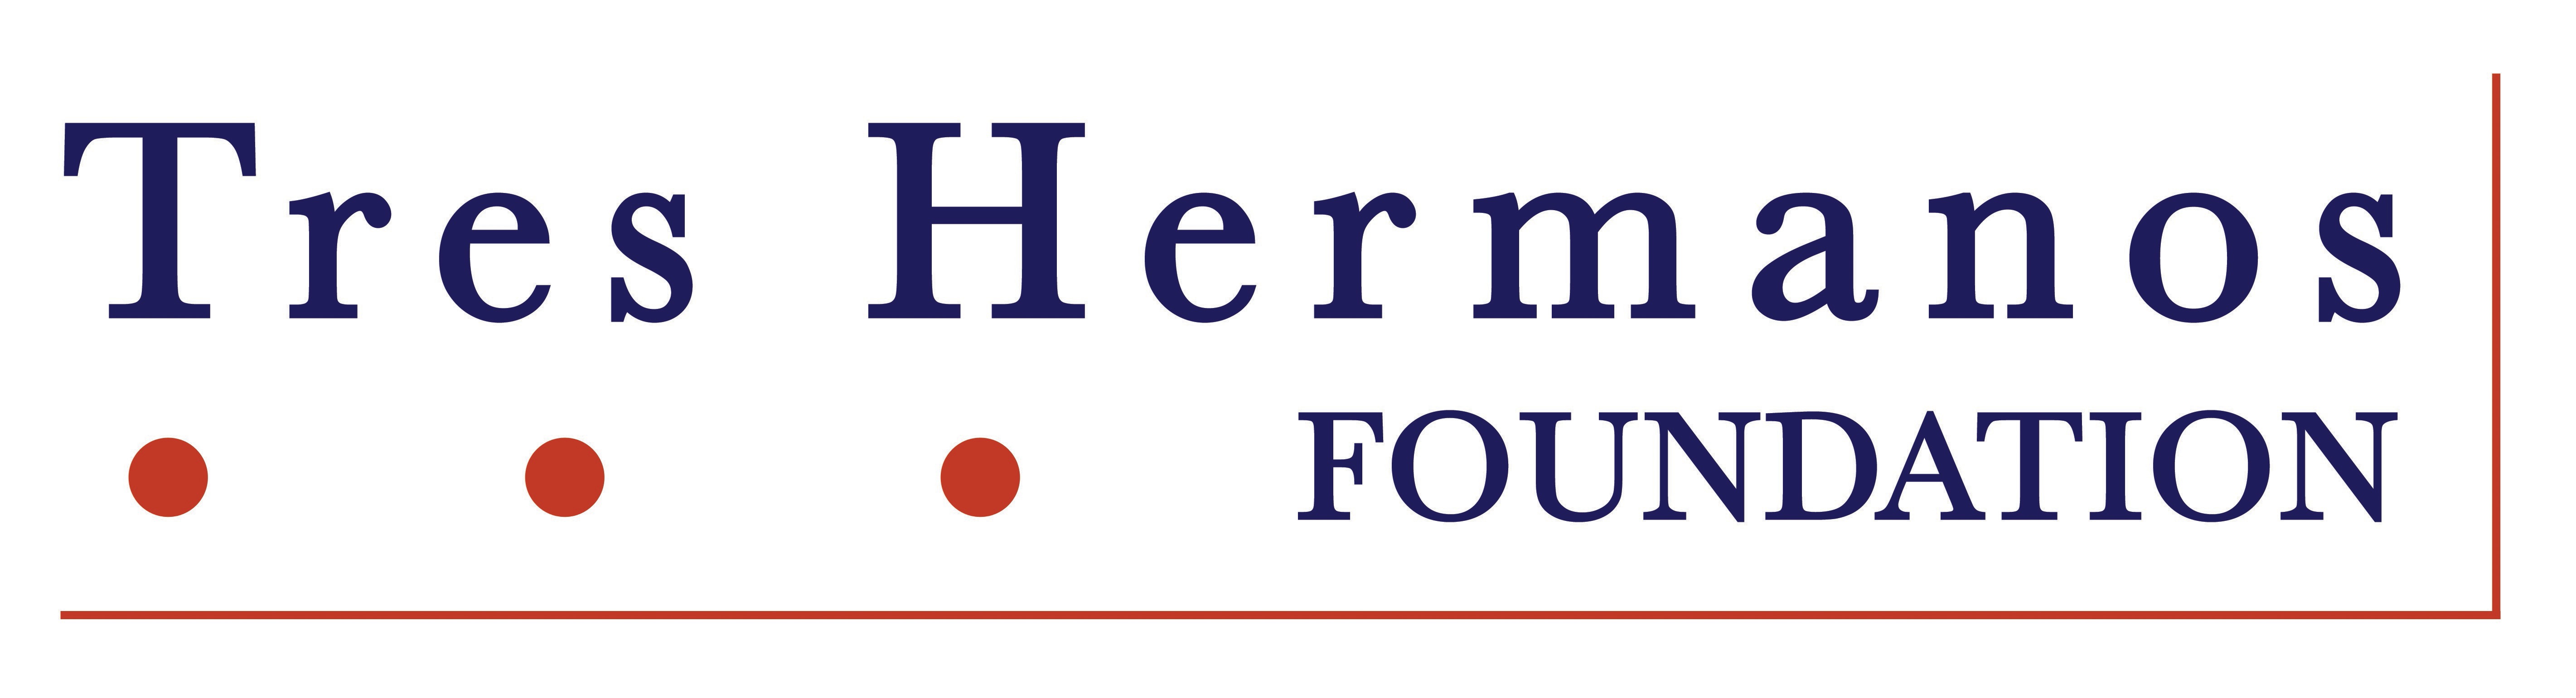 TRES HERMANOS FOUNDATION logo